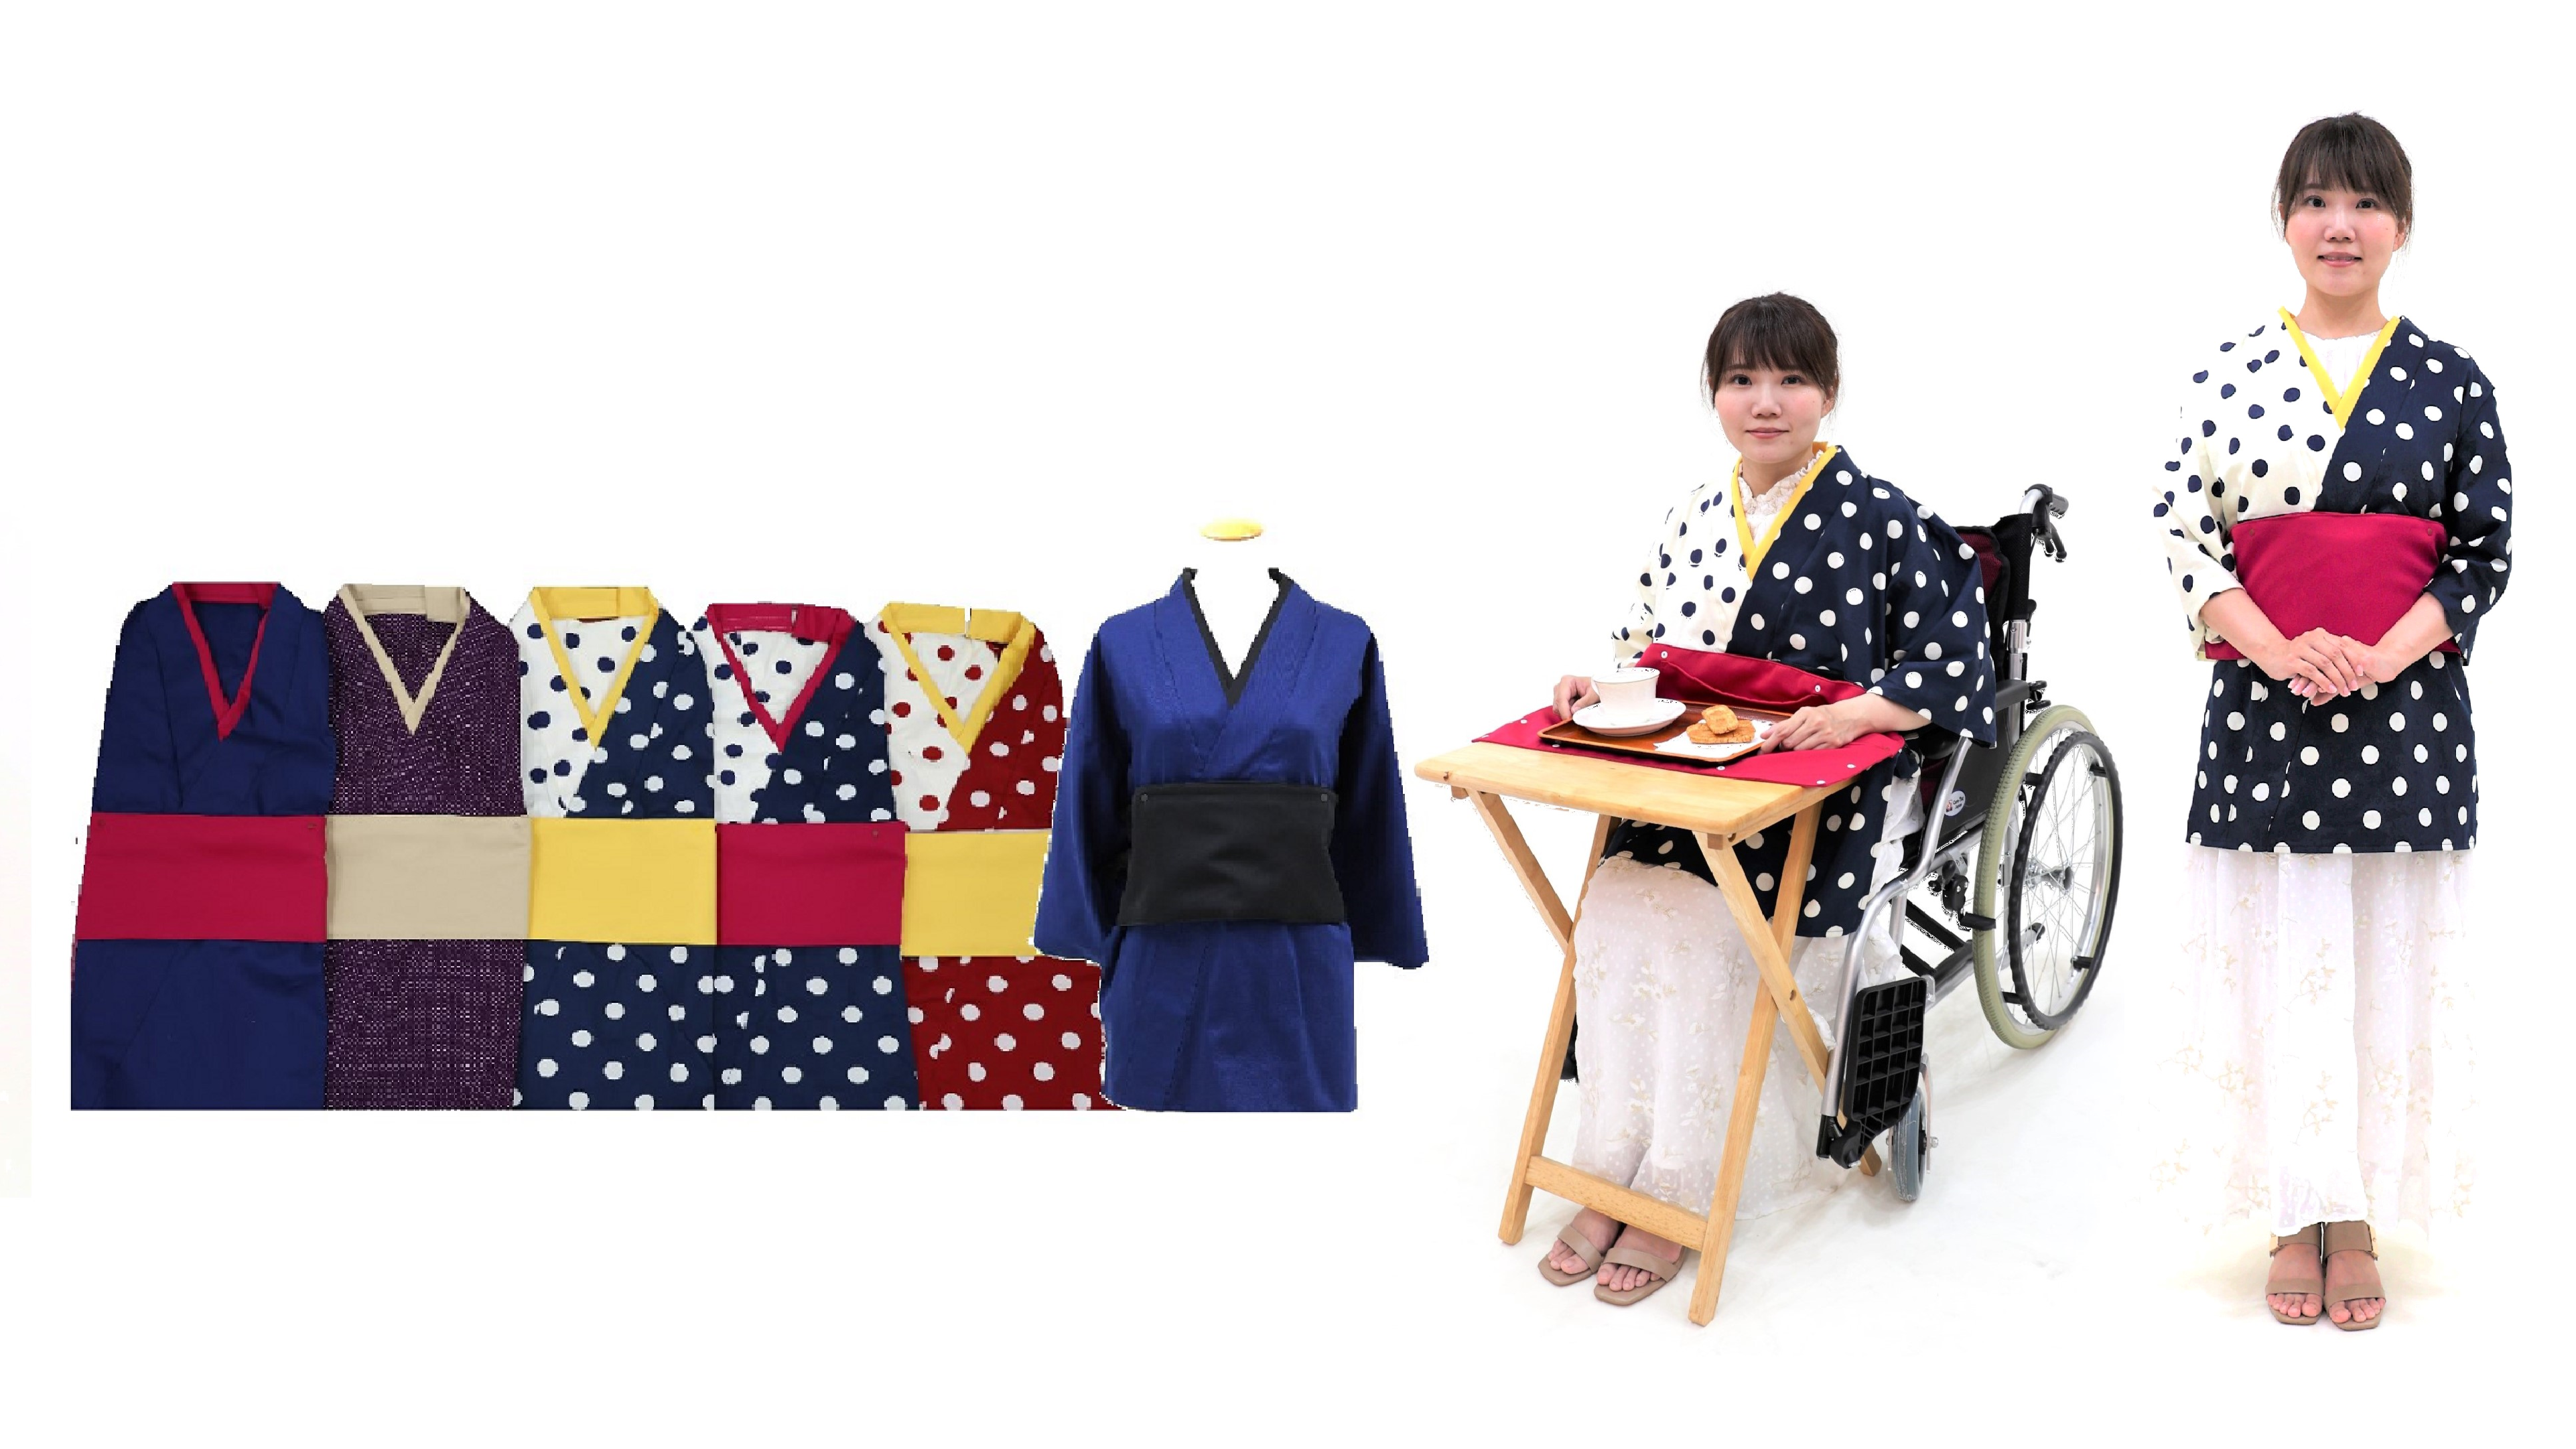 [Osarai-gi] is a universally designed kimono apron